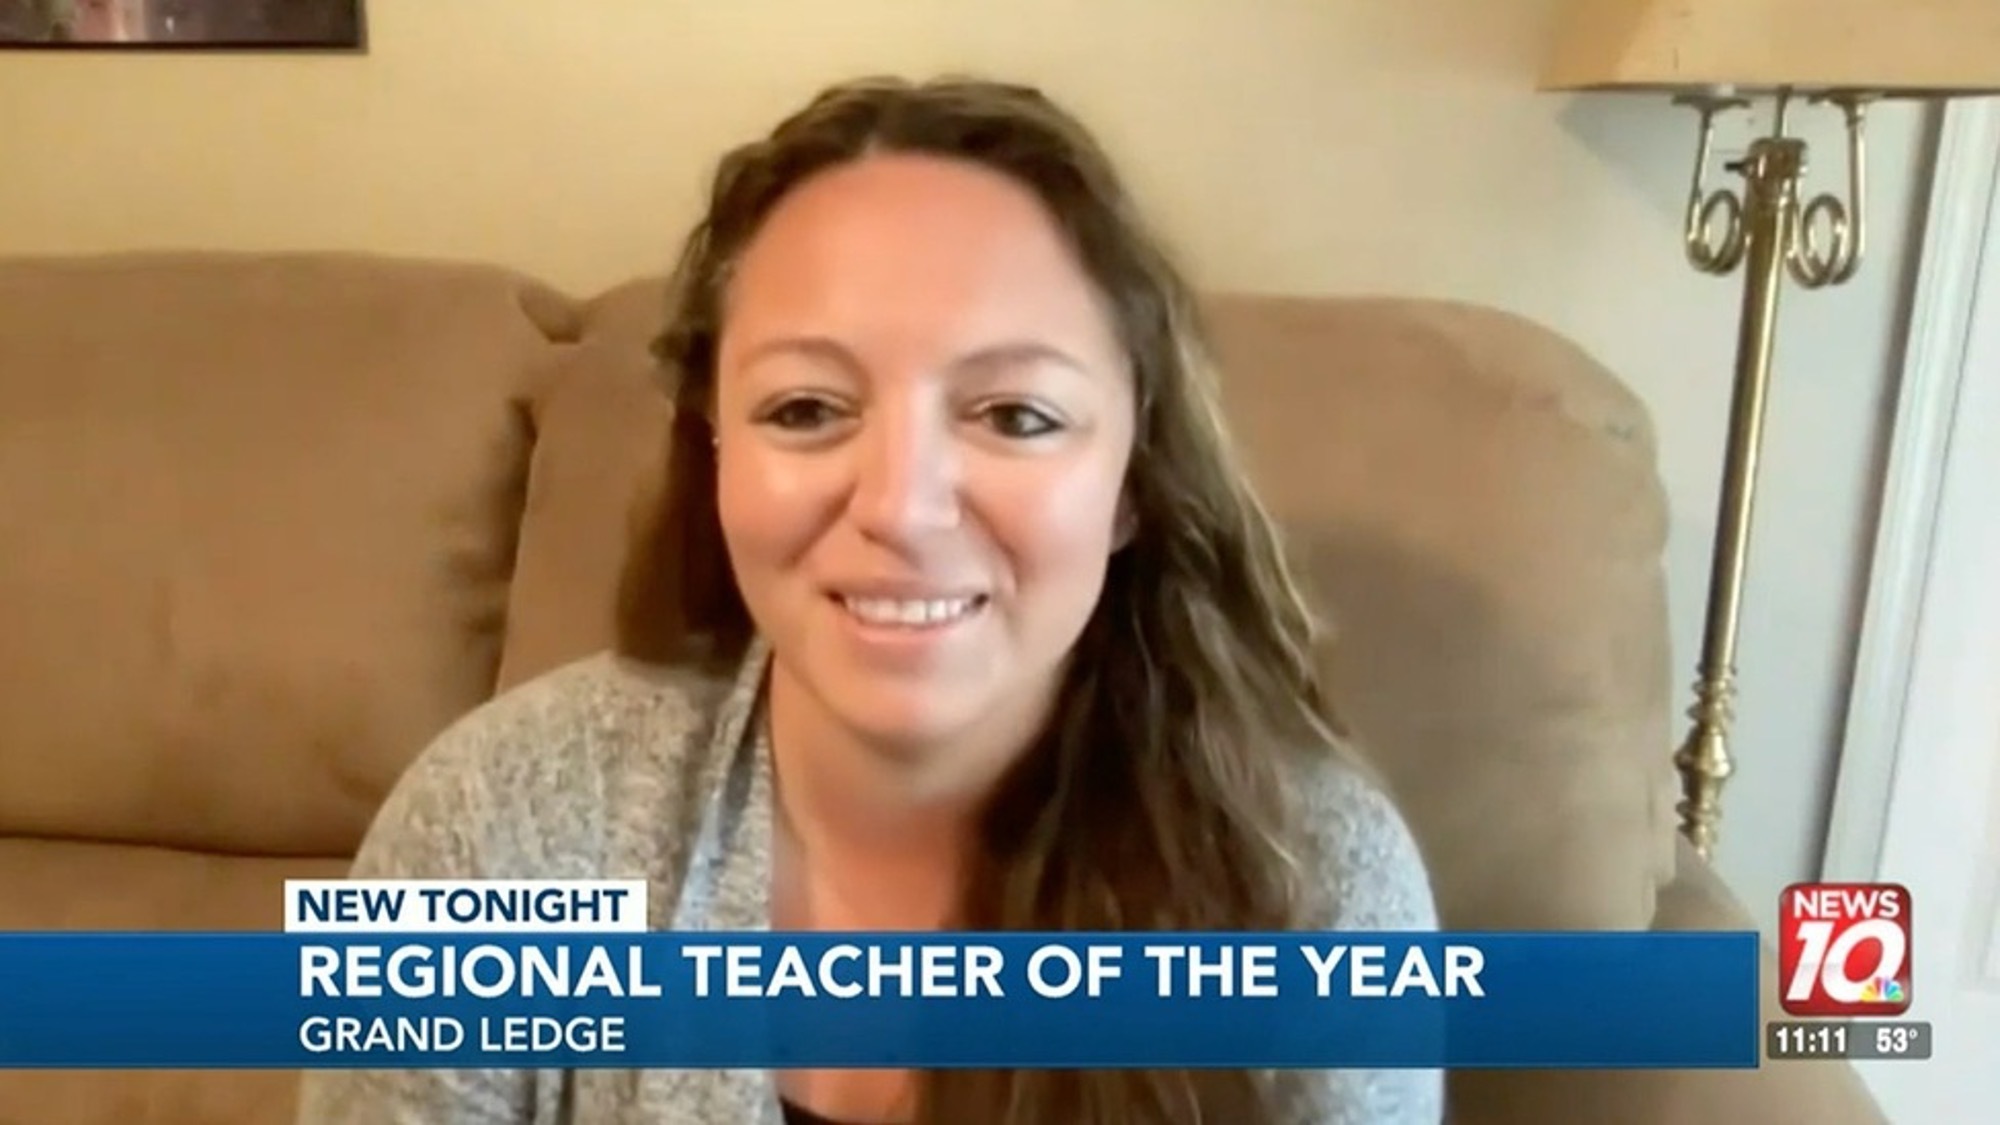 Ashleigh Lore is a Regional Teacher of the Year